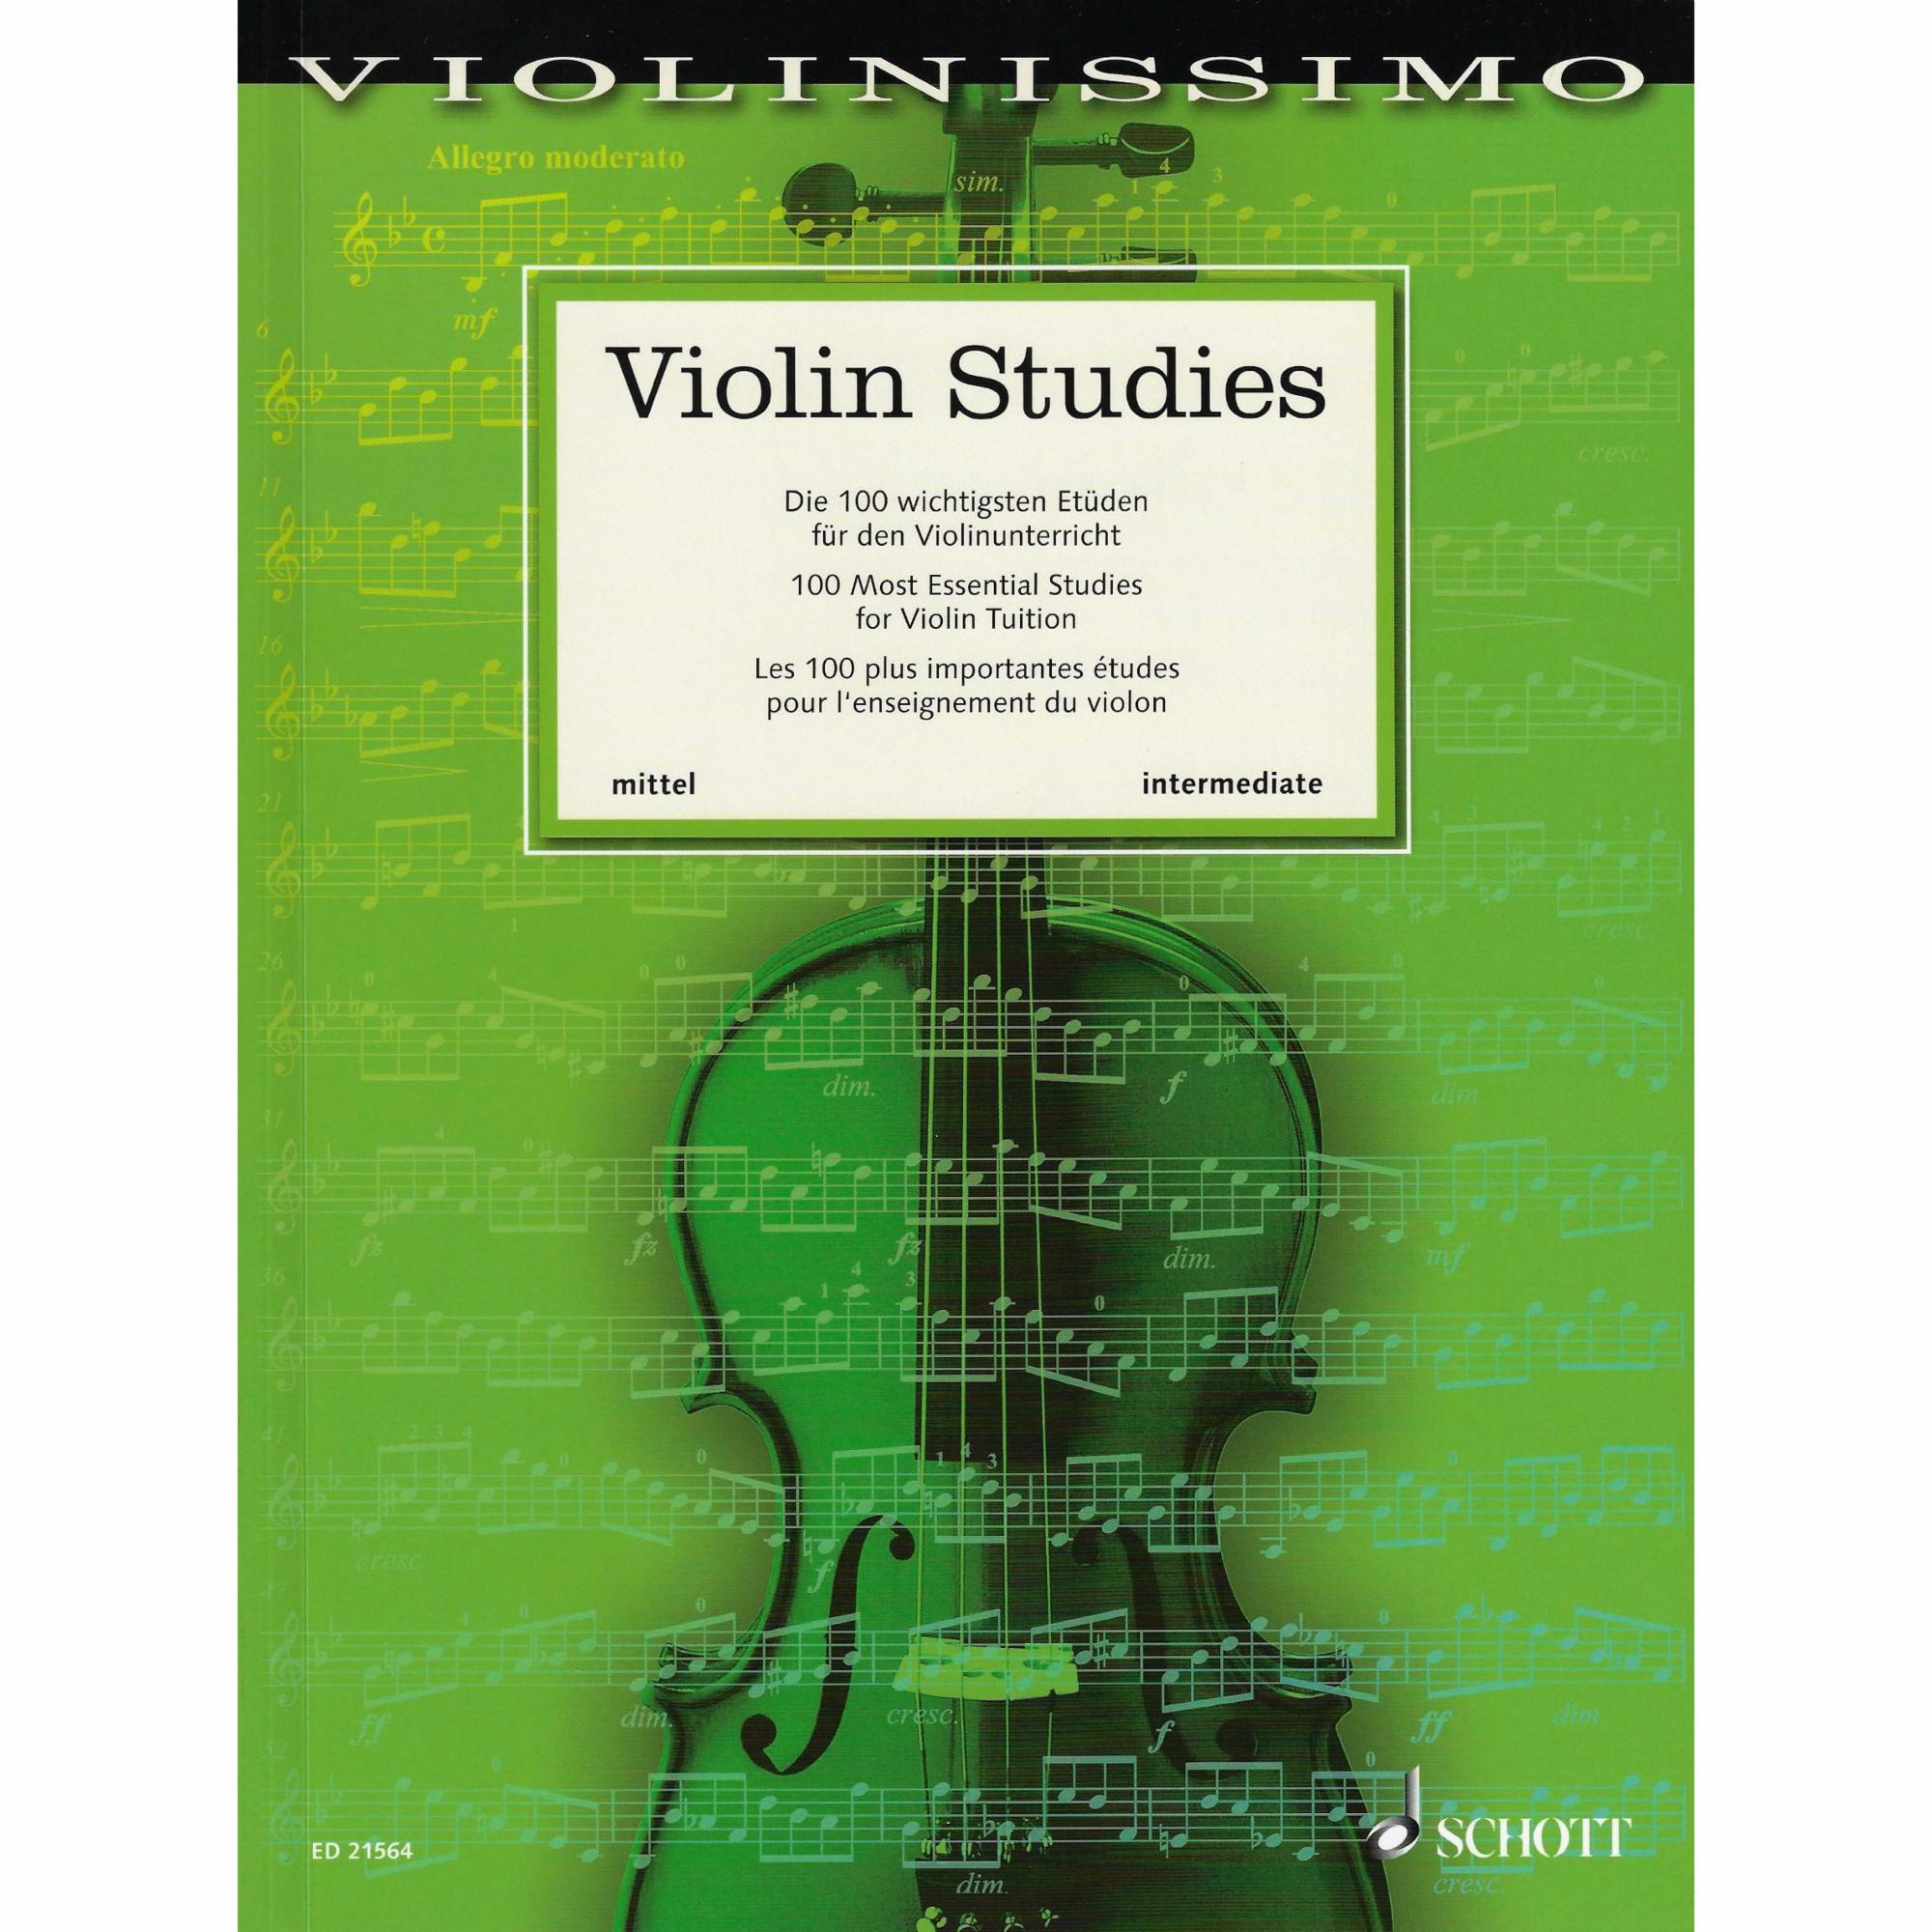 Violinissimo: Violin Studies